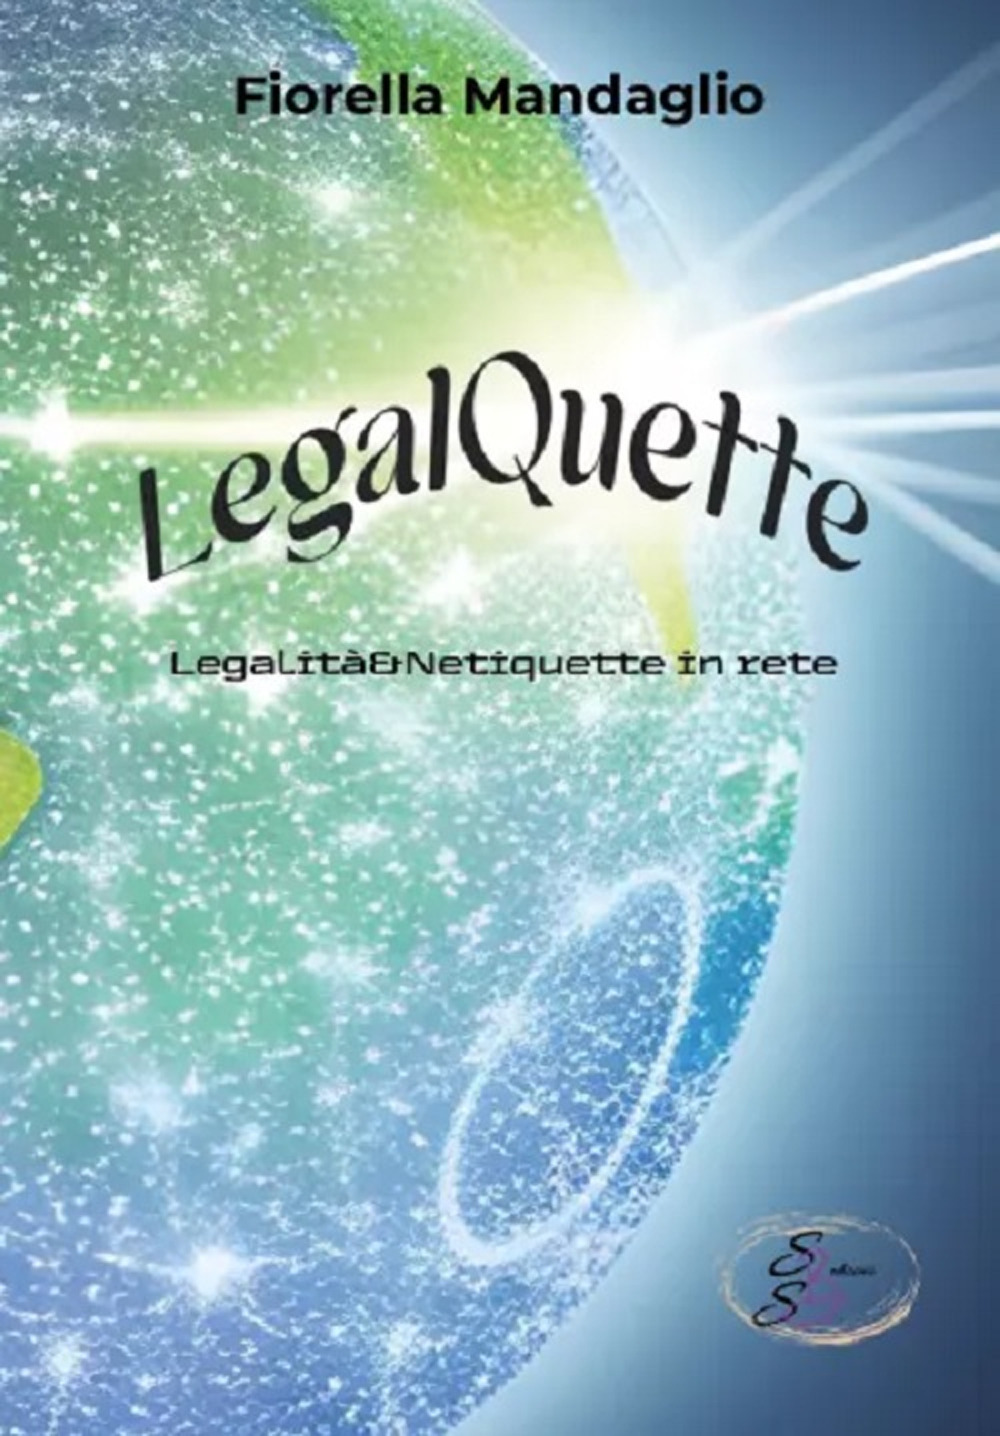 LegalQuette. Legalità & netiquette in rete